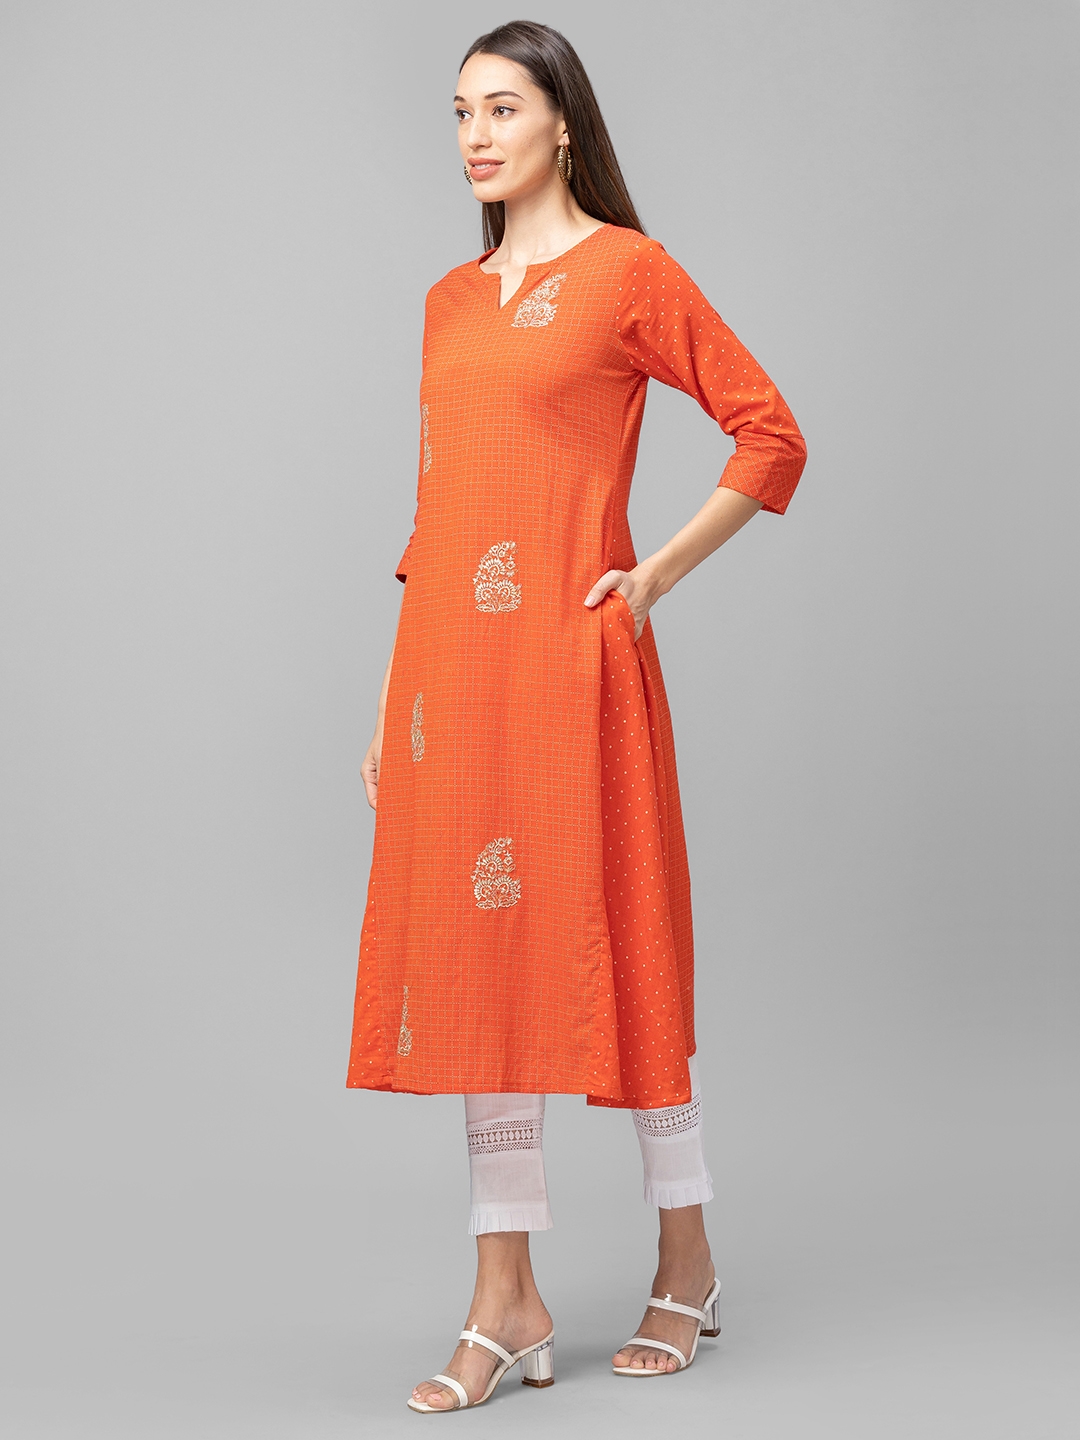 globus | Women's Orange Cotton Printed Kurtas 3